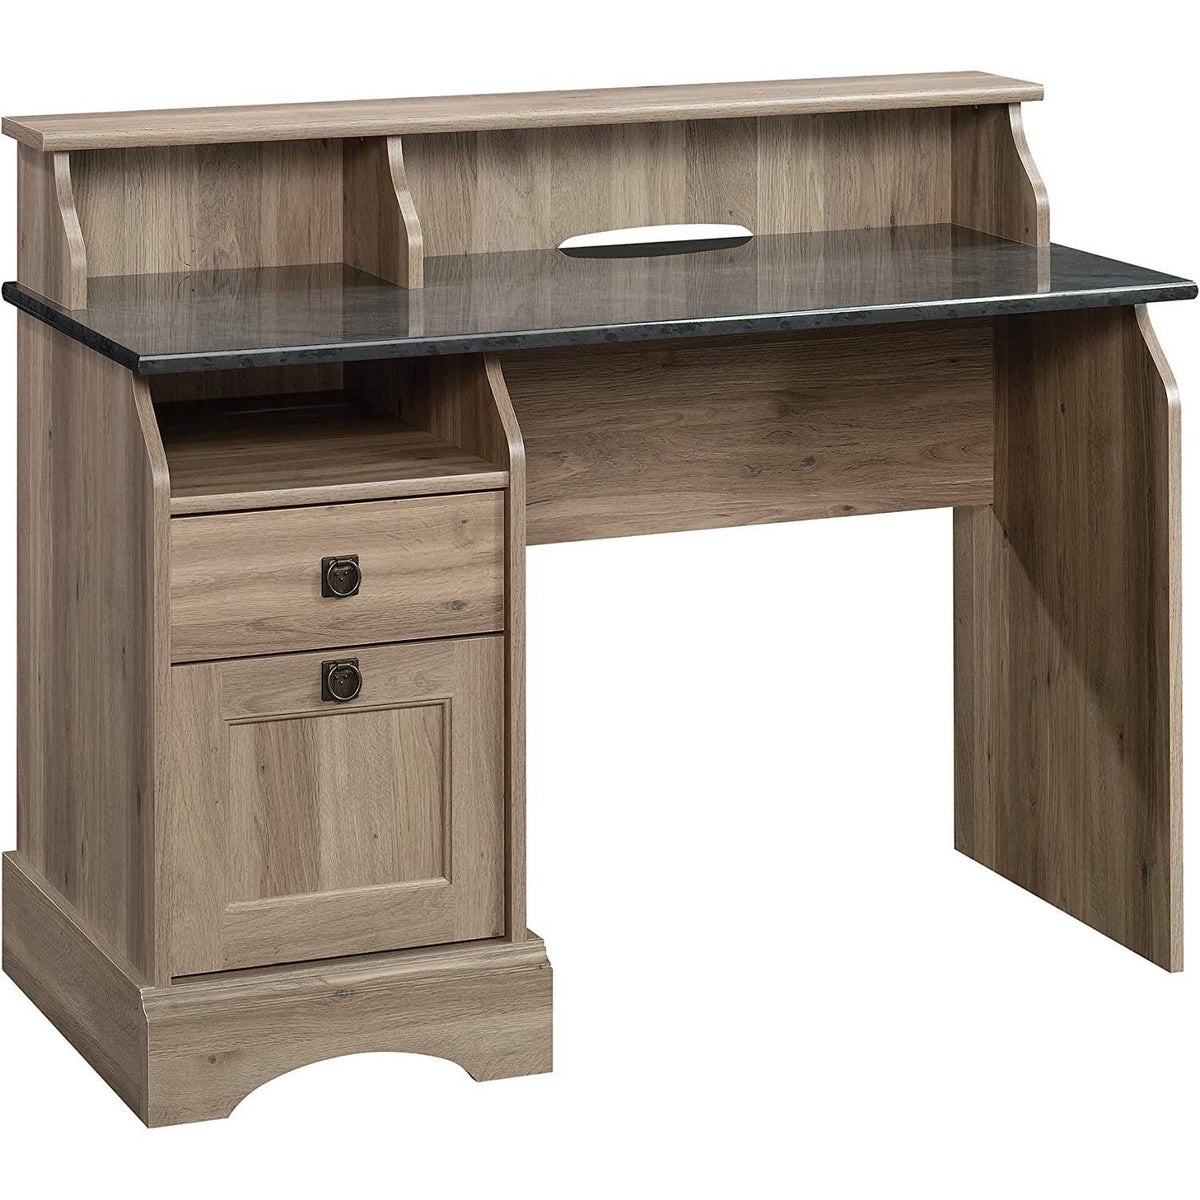 Rustic Oak Slat Top Computer Desk w/ Filing Cabinet